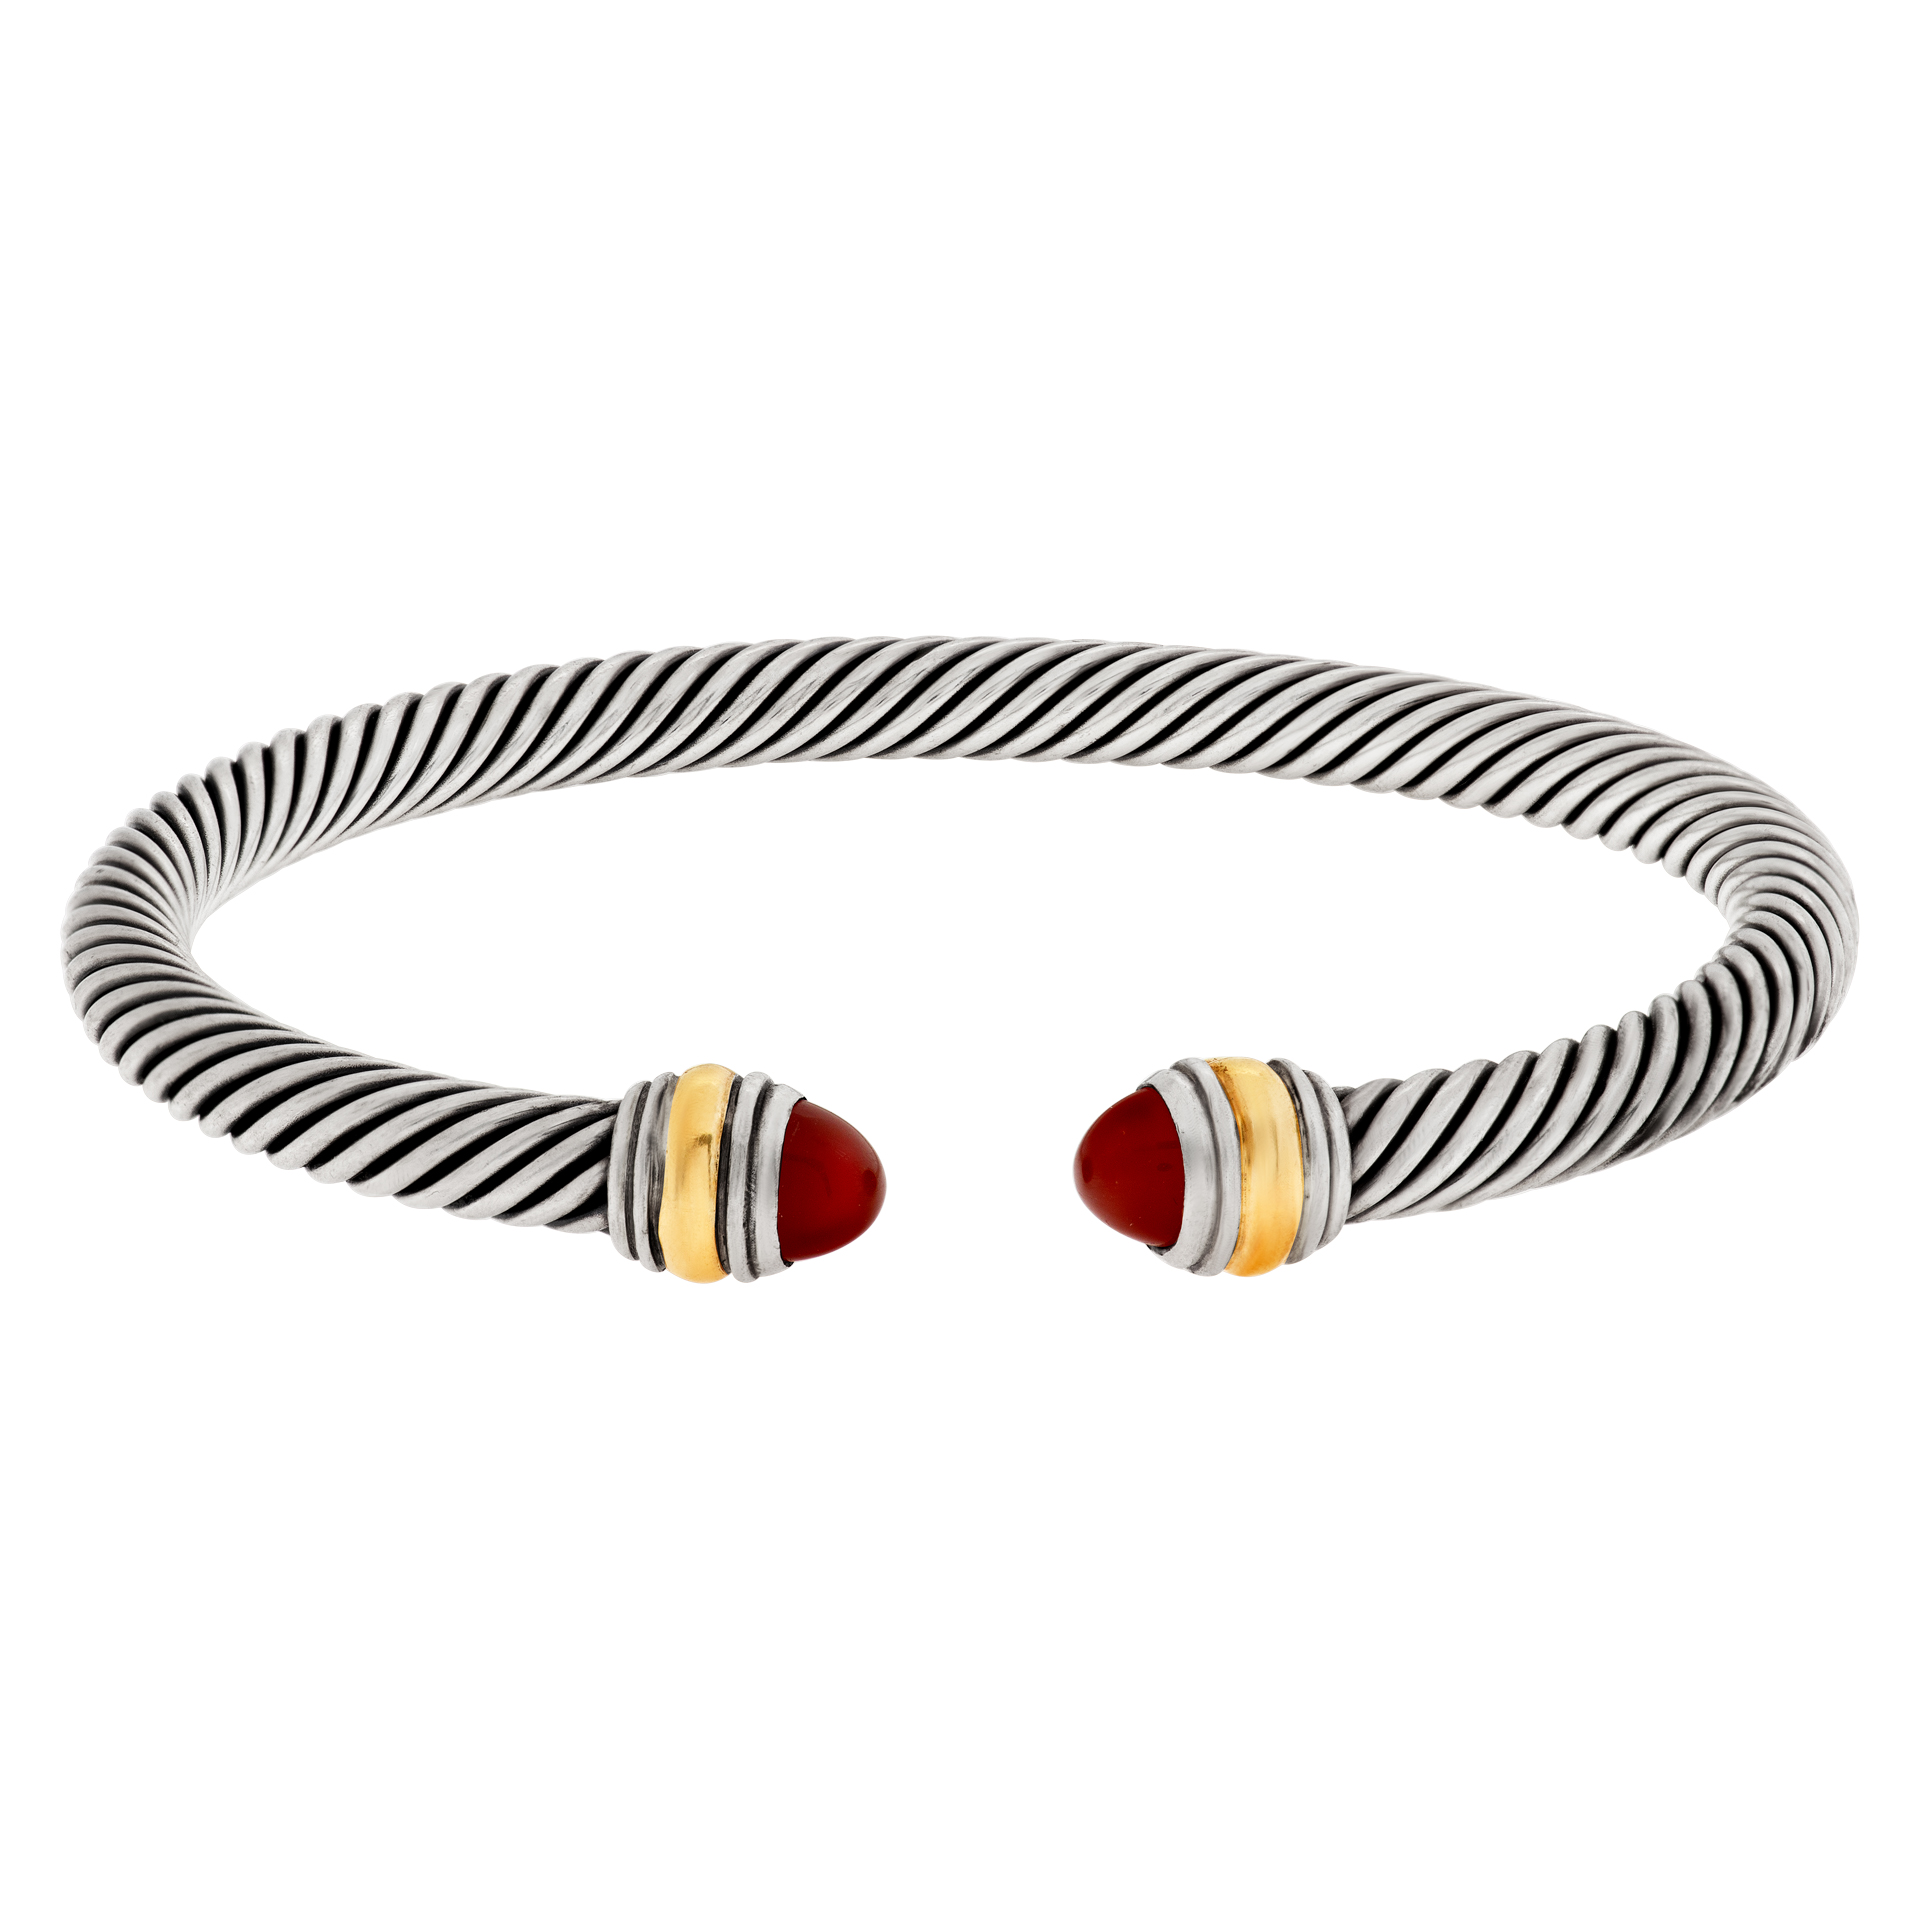 David Yurman cable cuff bracelet image 1